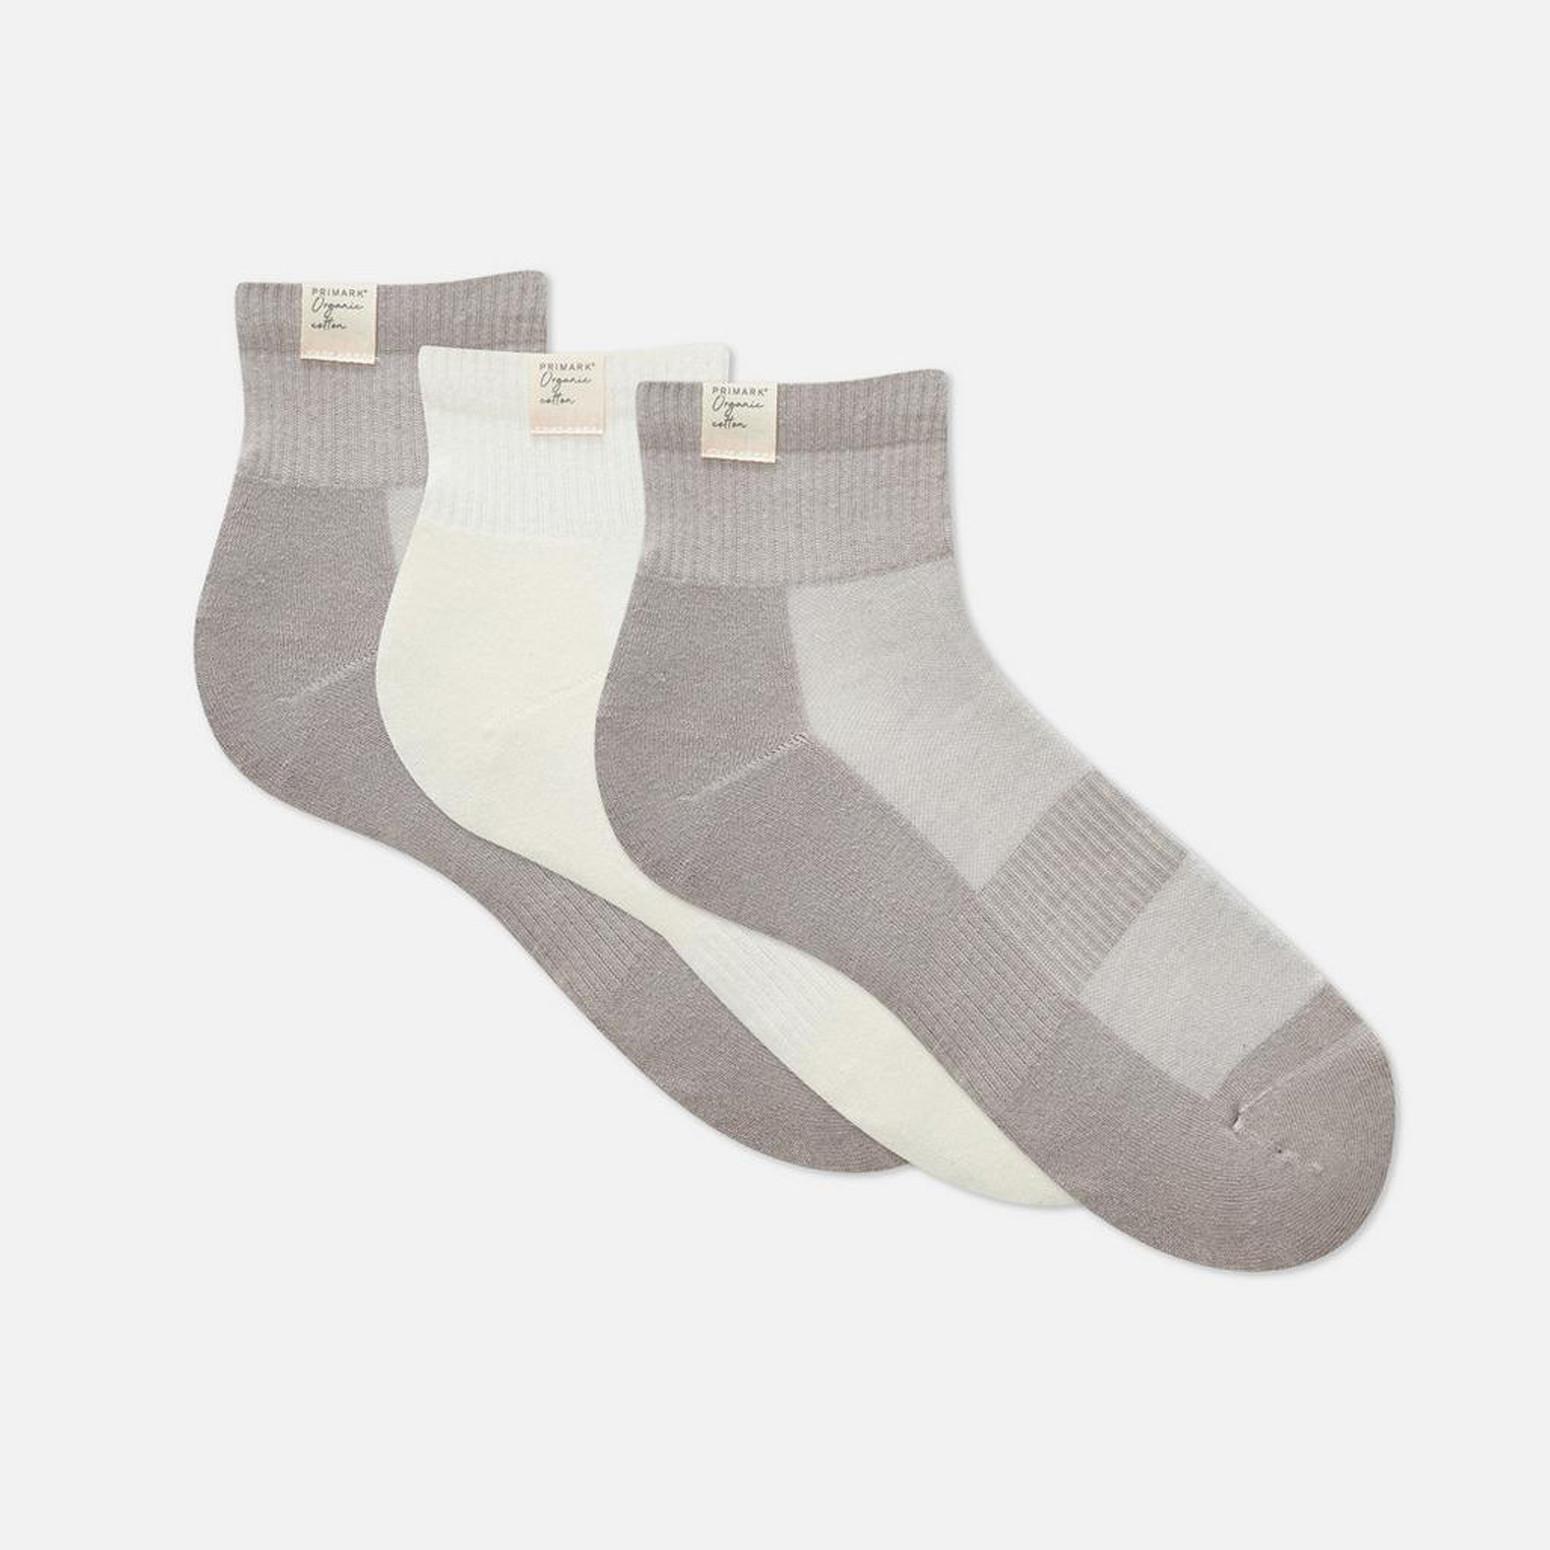 Womens ankle socks